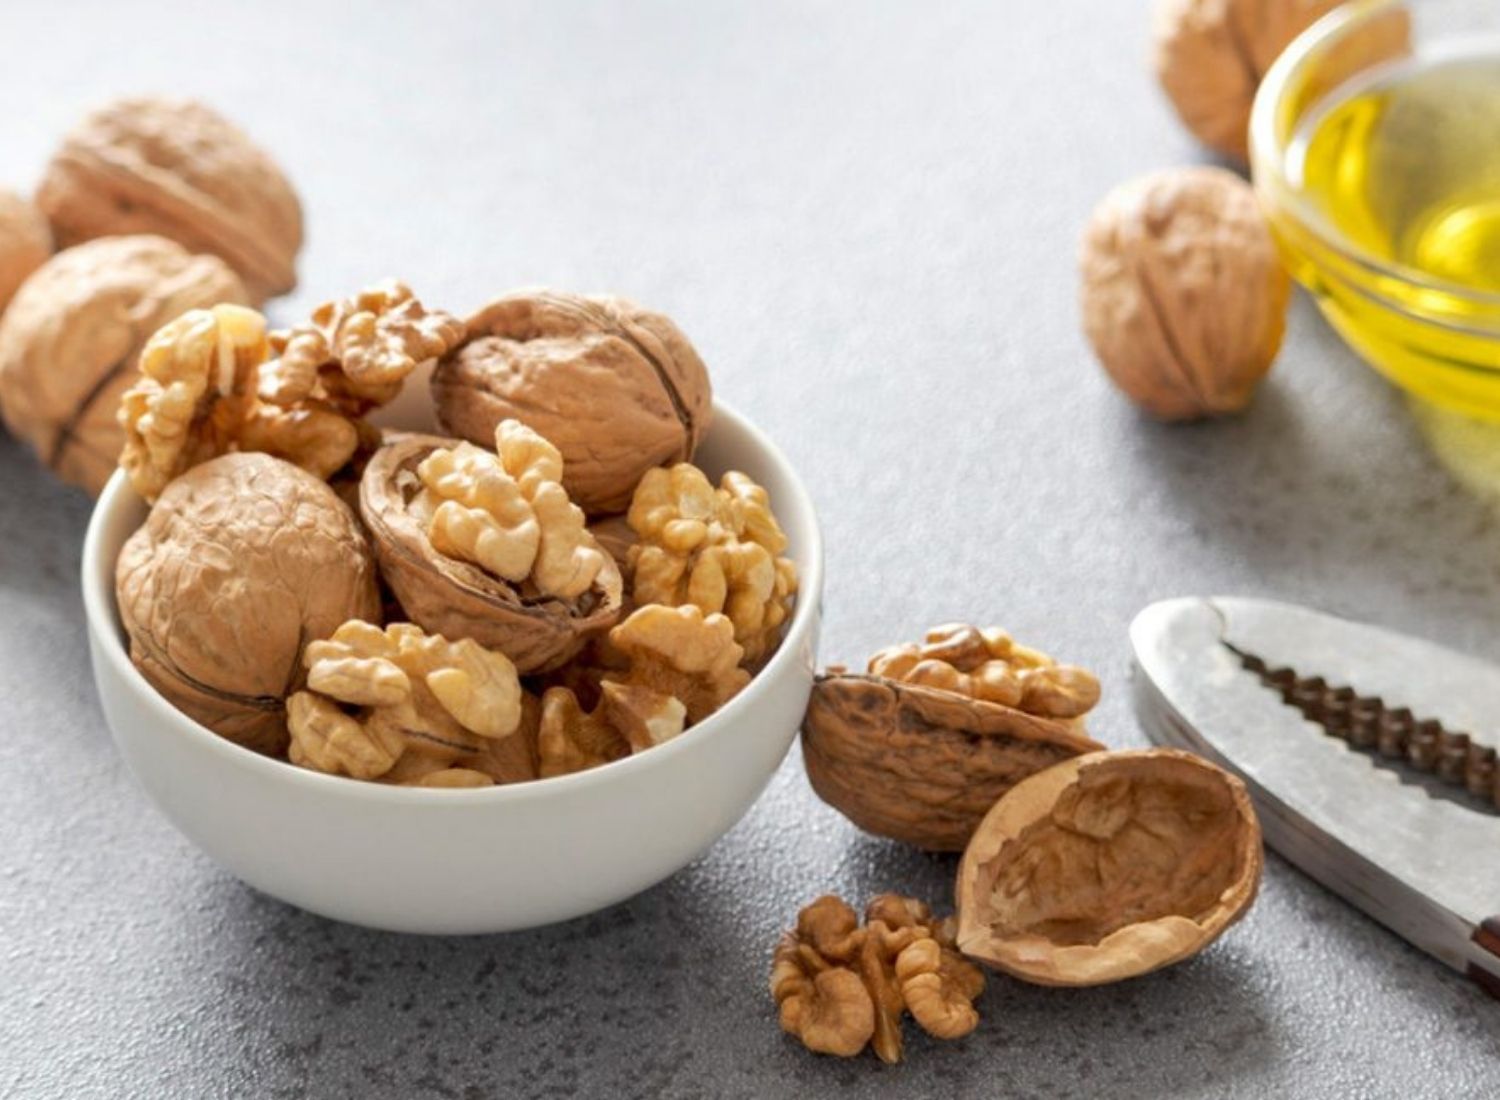 12 Top Health Benefits Of Walnuts